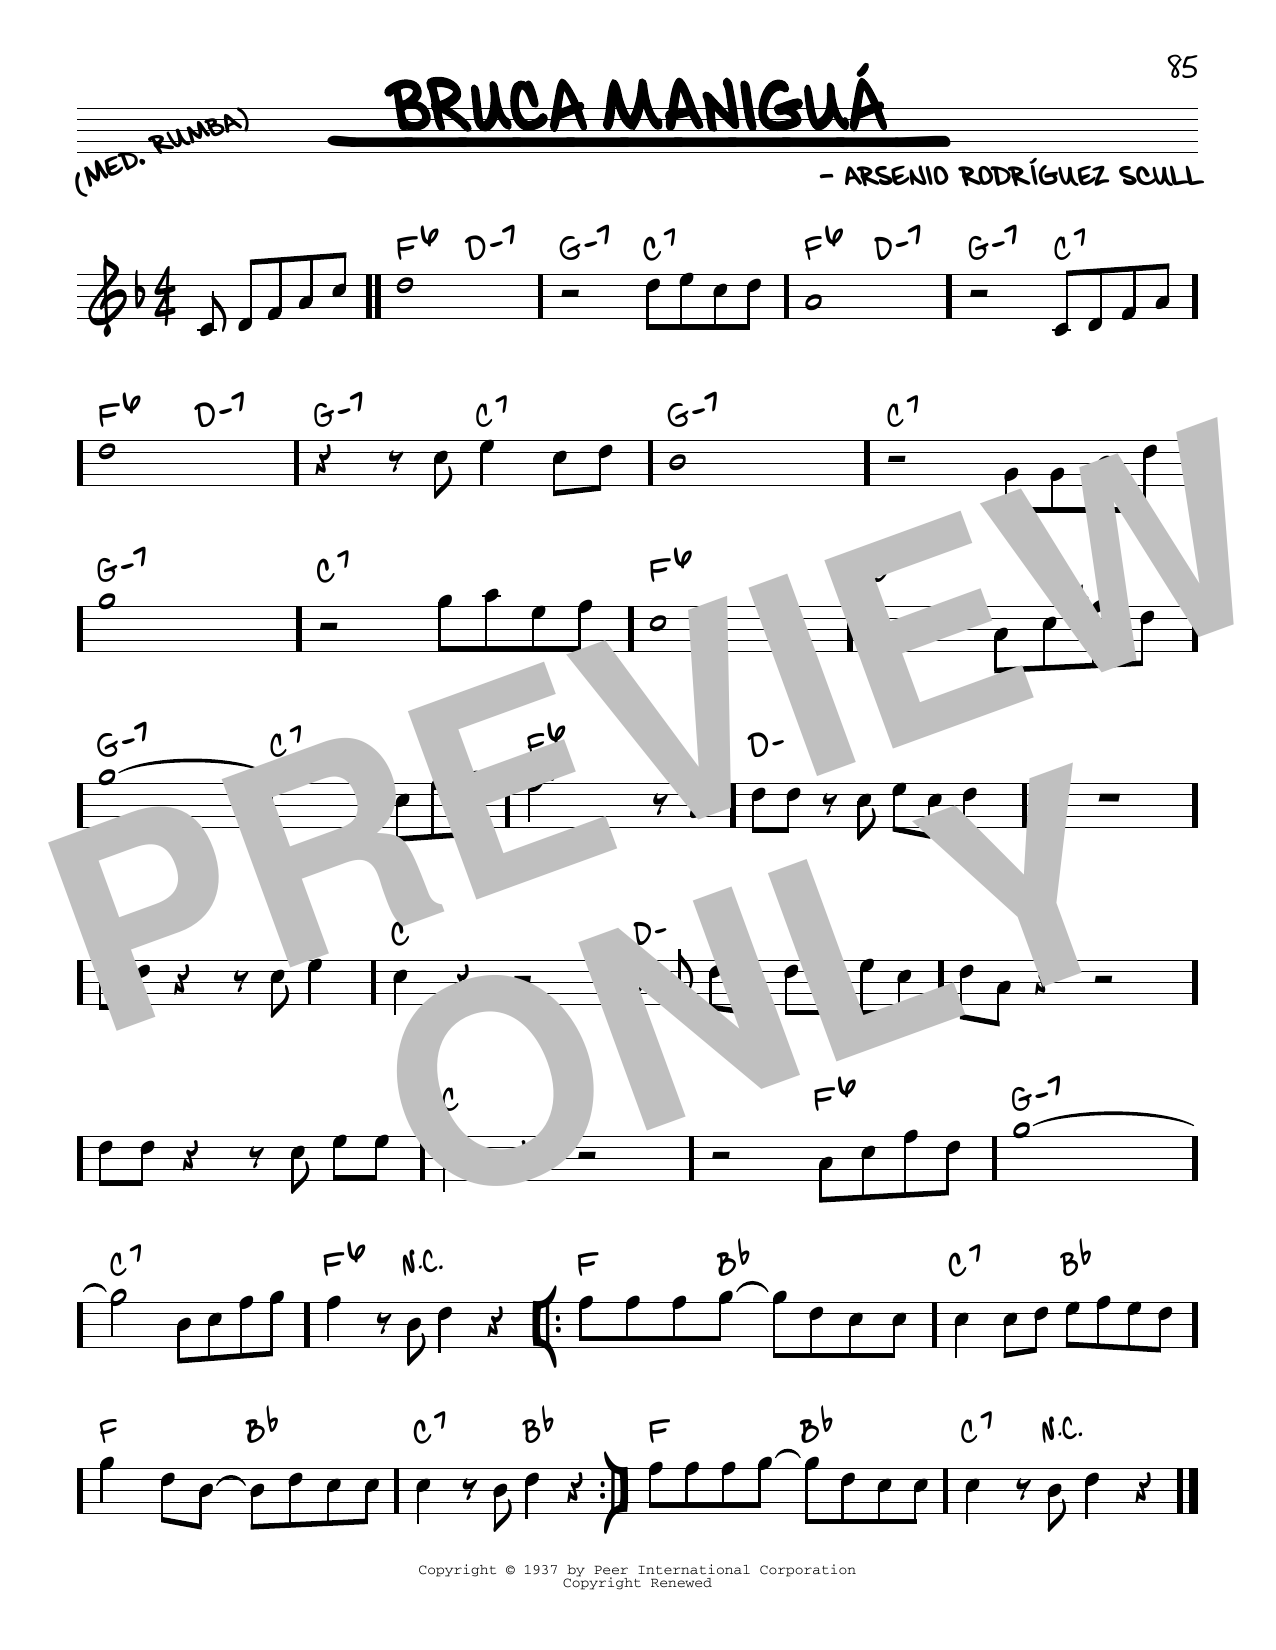 Orquesta Sensacion Bruca Manigua Sheet Music Notes & Chords for Real Book – Melody & Chords - Download or Print PDF